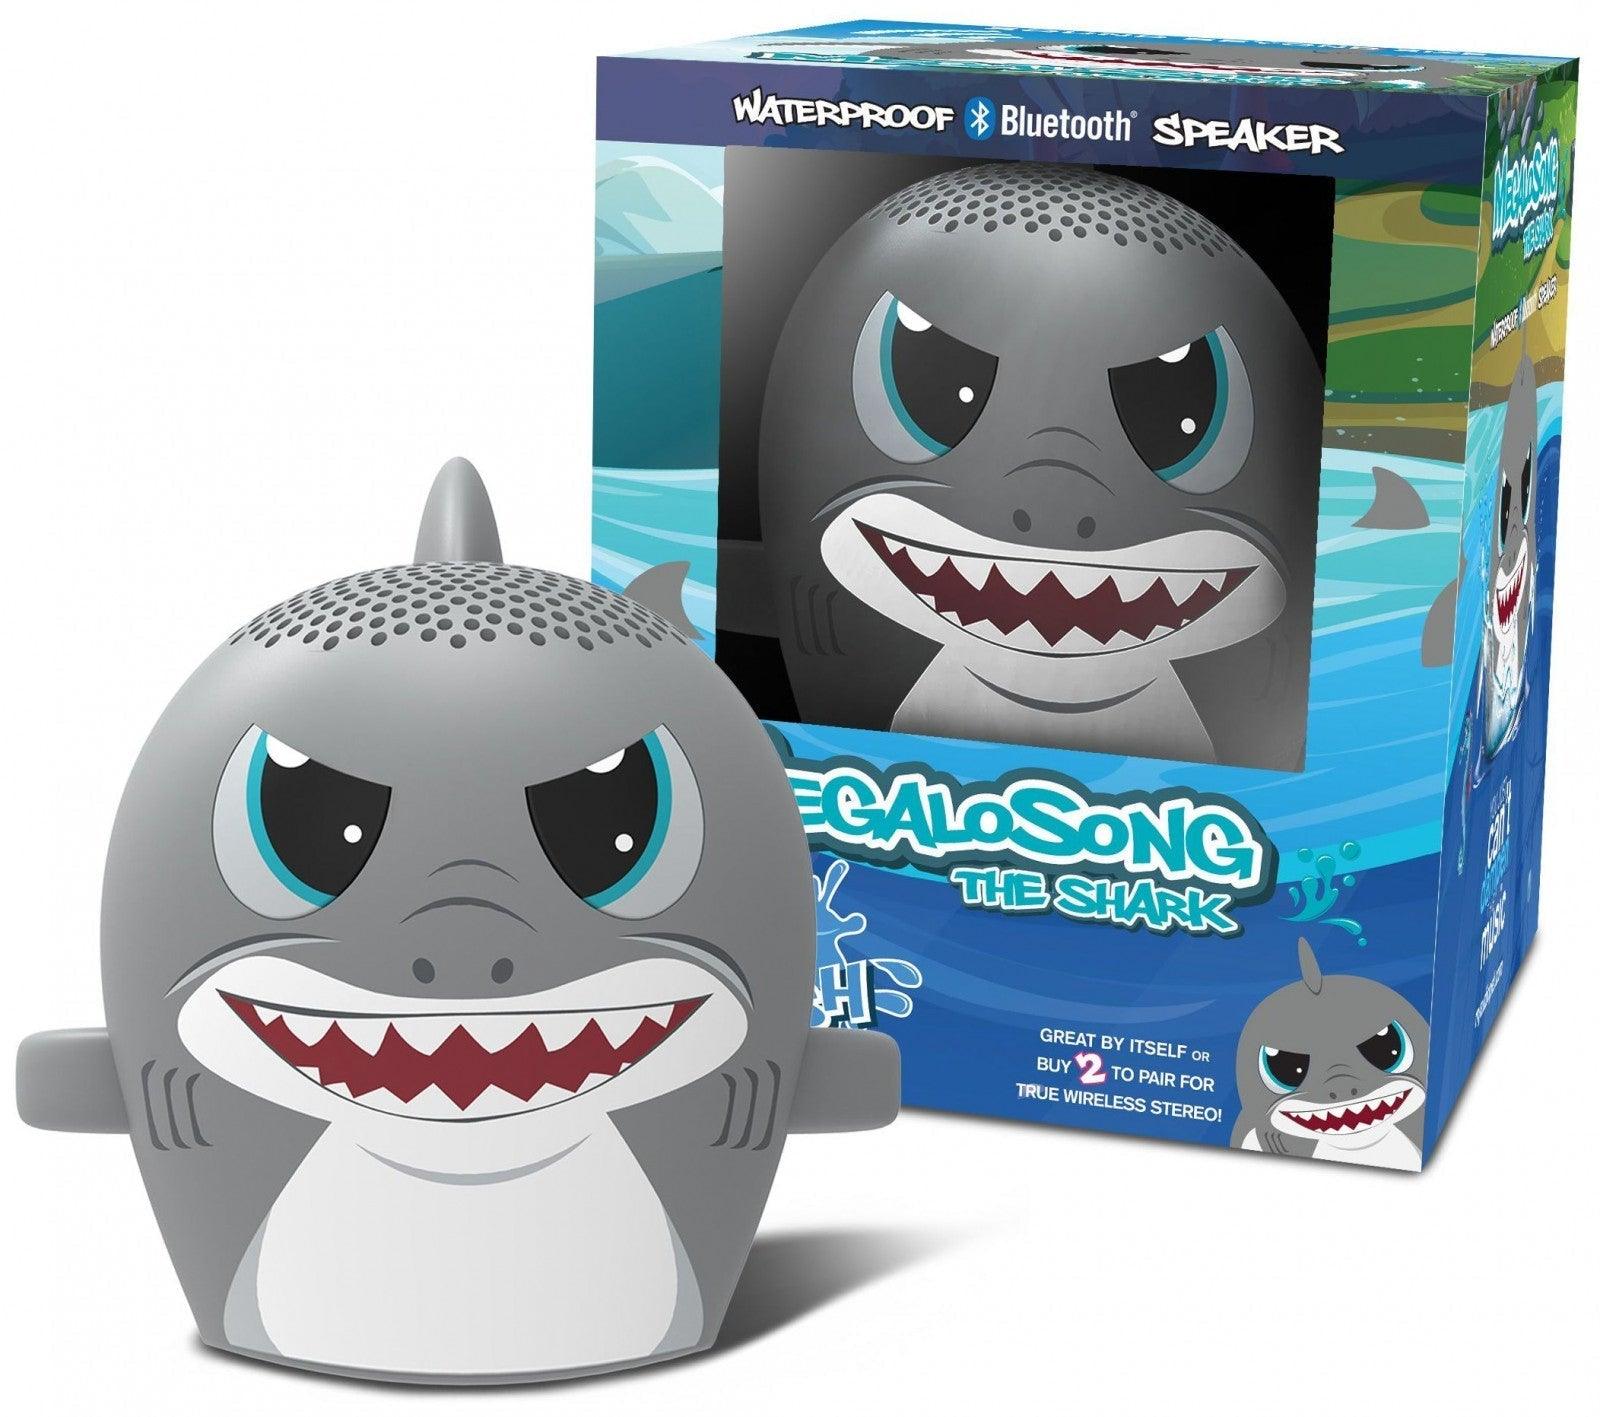 VR-79339 My Audio Pet Bluetooth Speaker Waterproof Splash Pet - MegaloSong the Shark - You Monkey - Titan Pop Culture